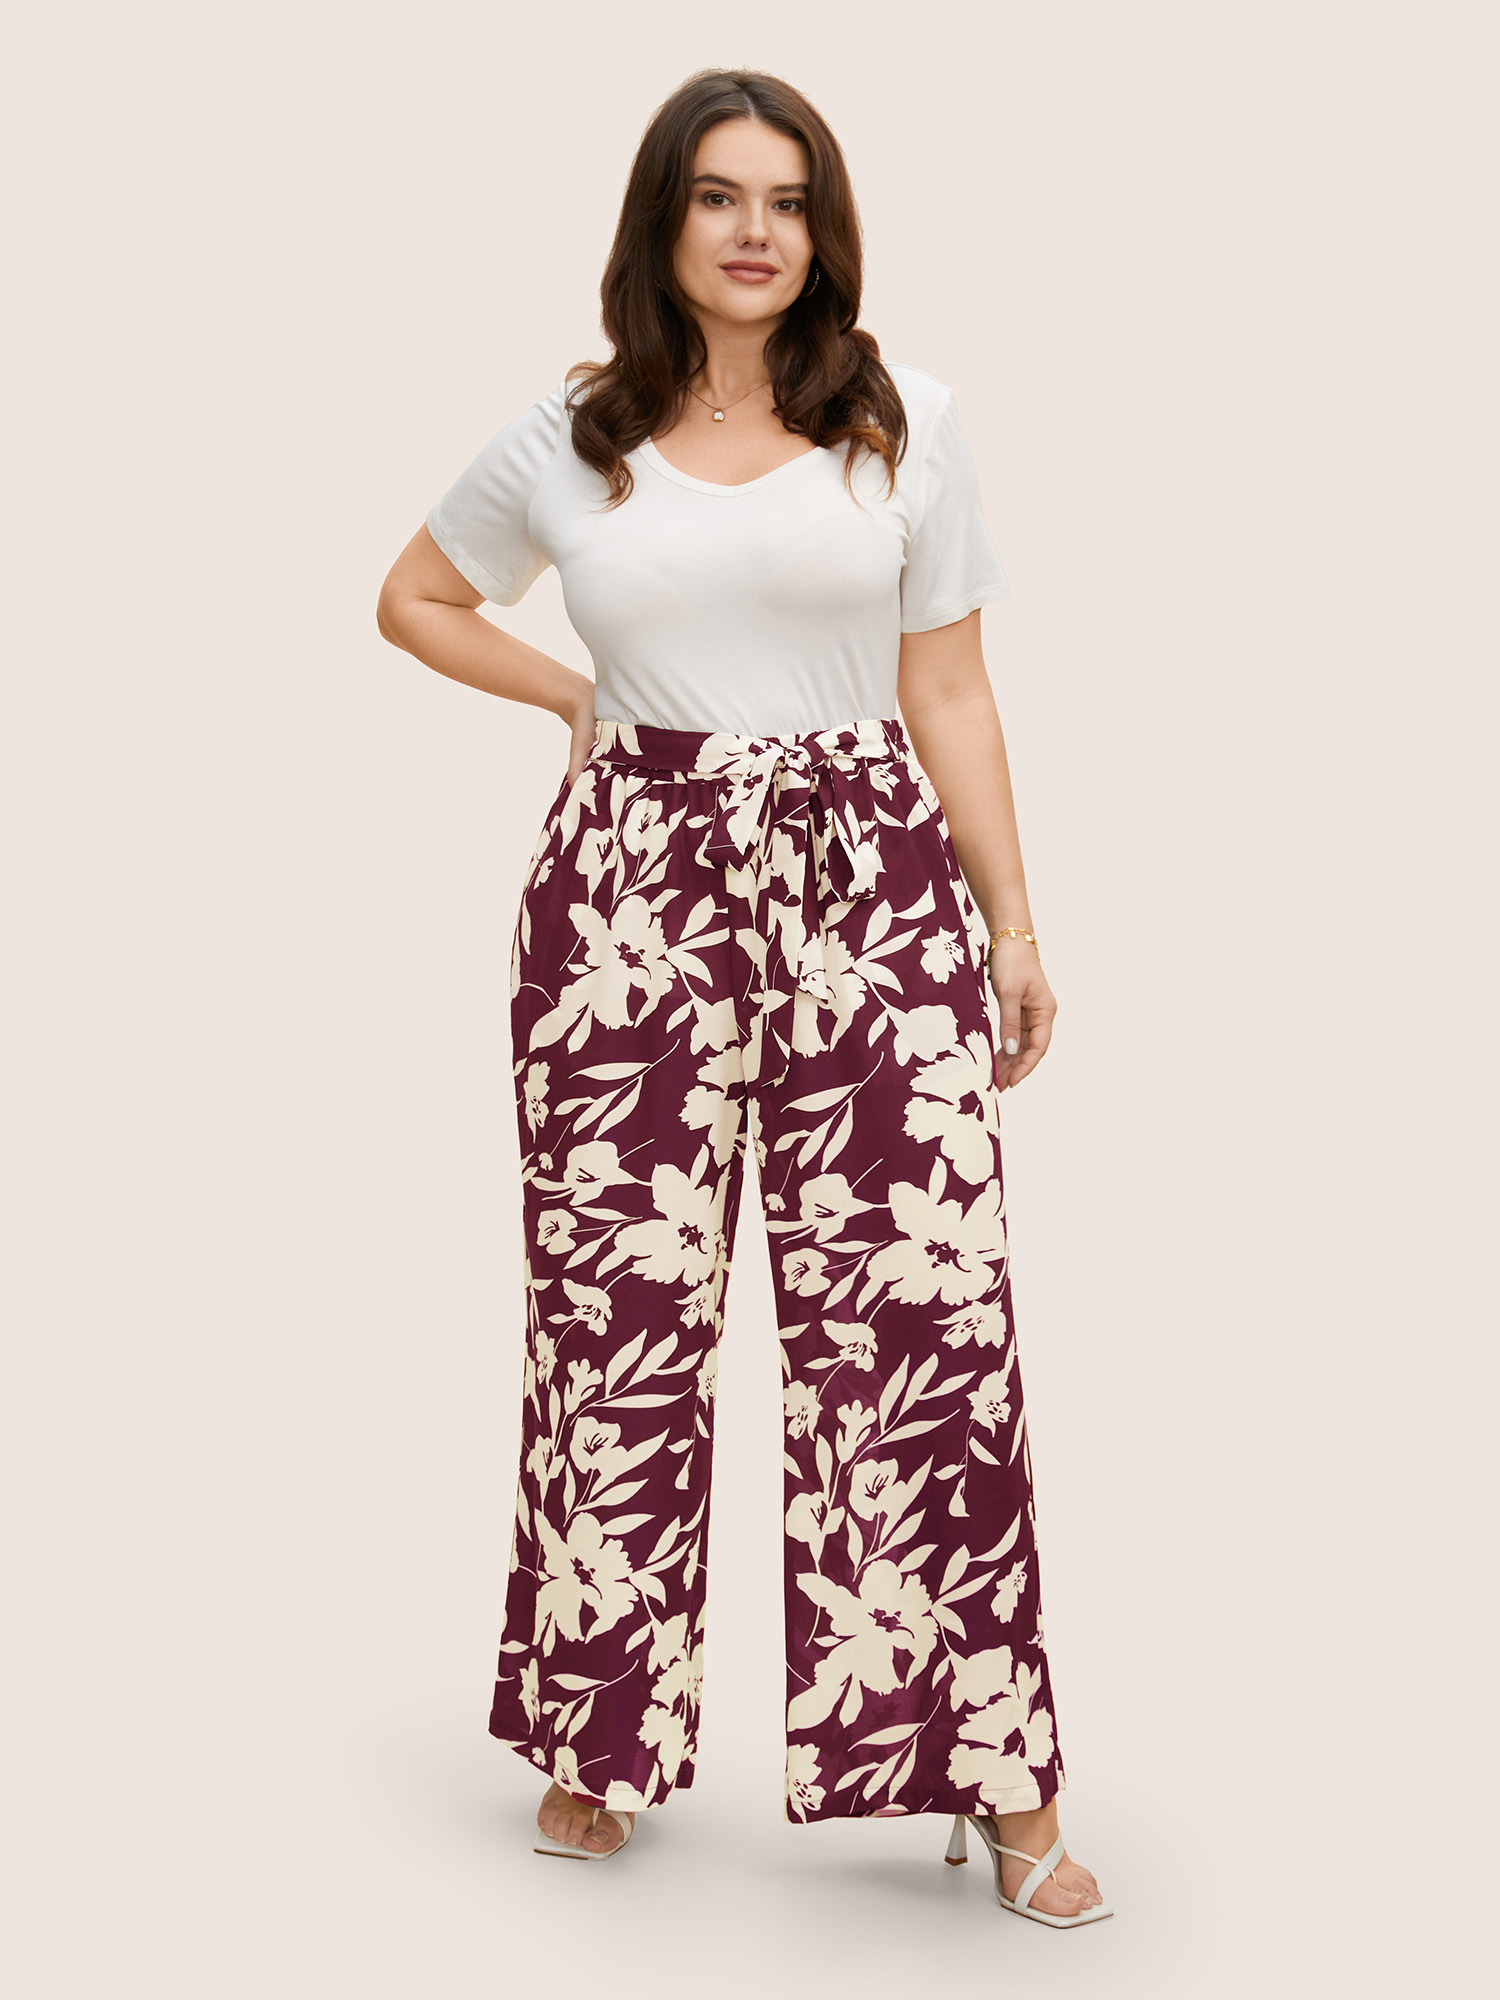 

Plus Size Silhouette Floral Print Ties Side Seam Pocket Pants Women Scarlet Elegant Wide Leg High Rise Everyday Pants BloomChic